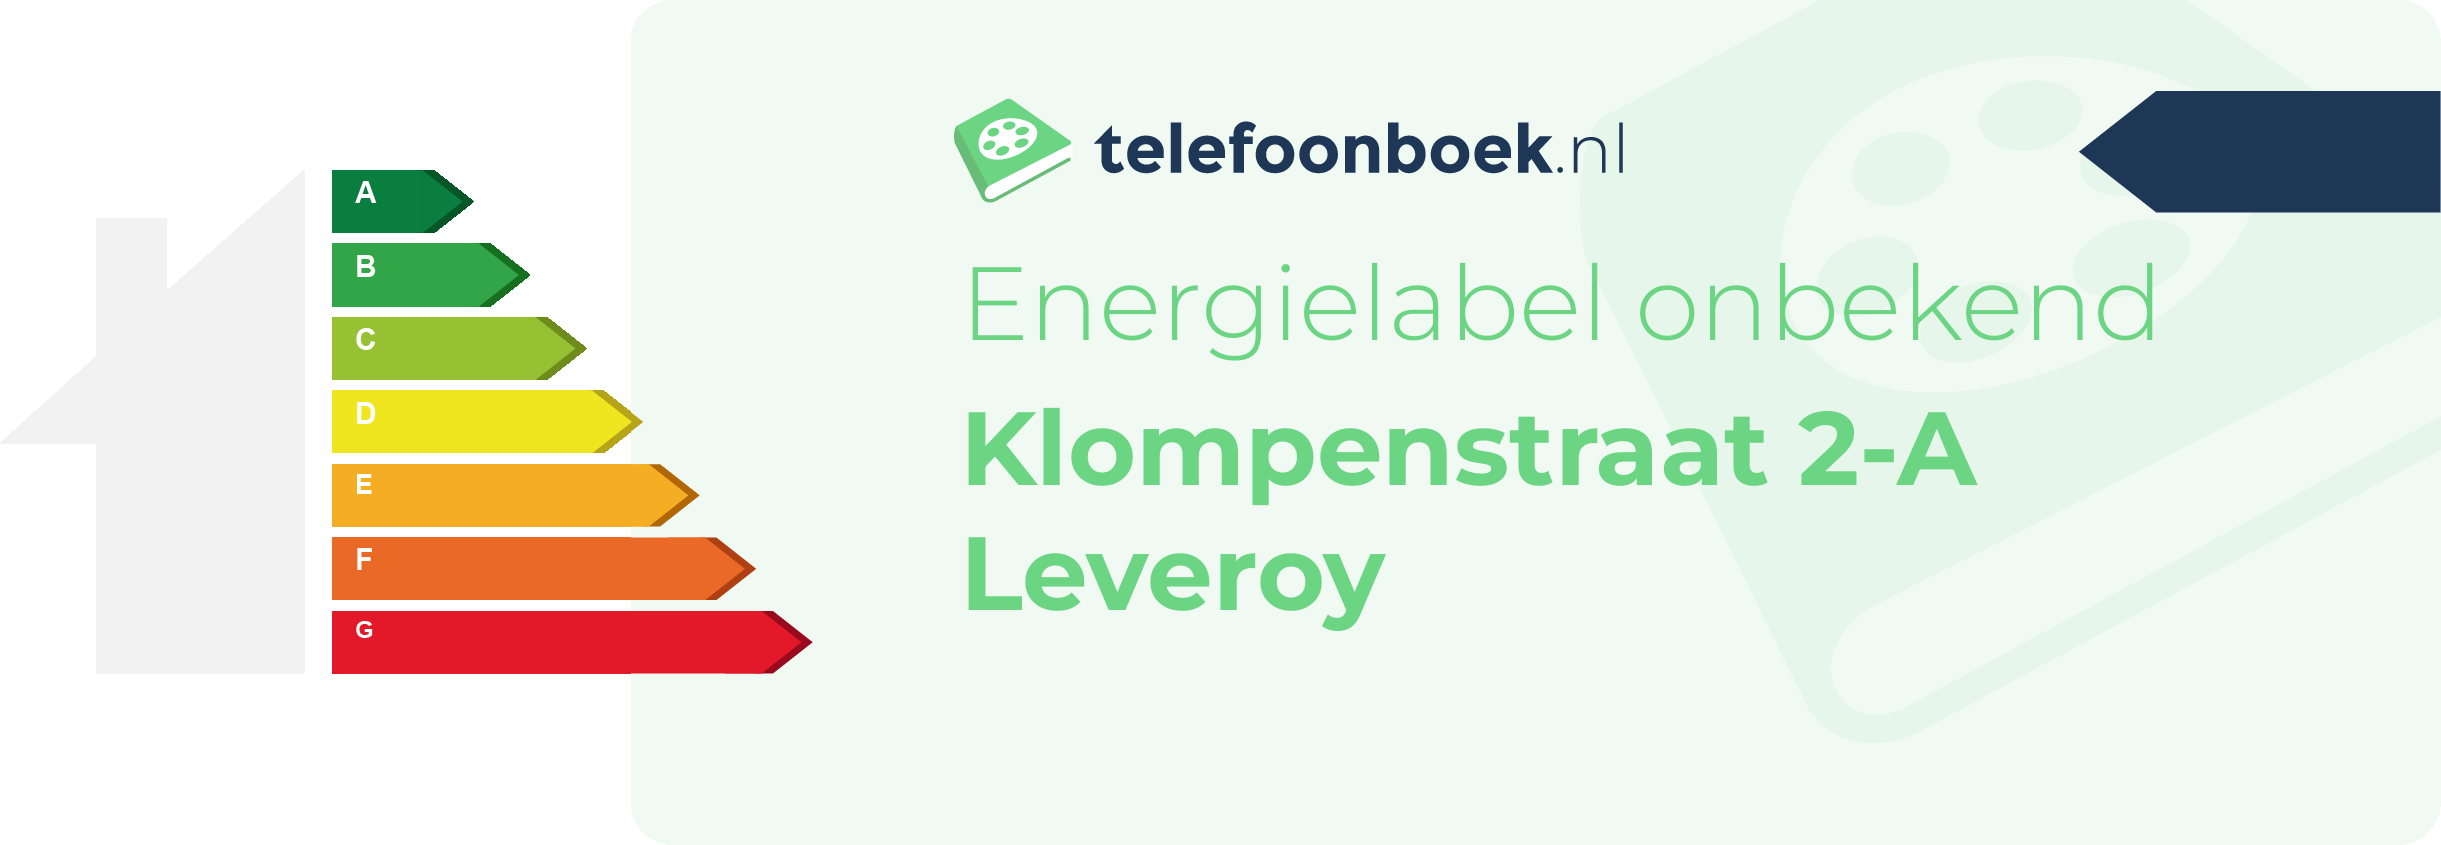 Energielabel Klompenstraat 2-A Leveroy